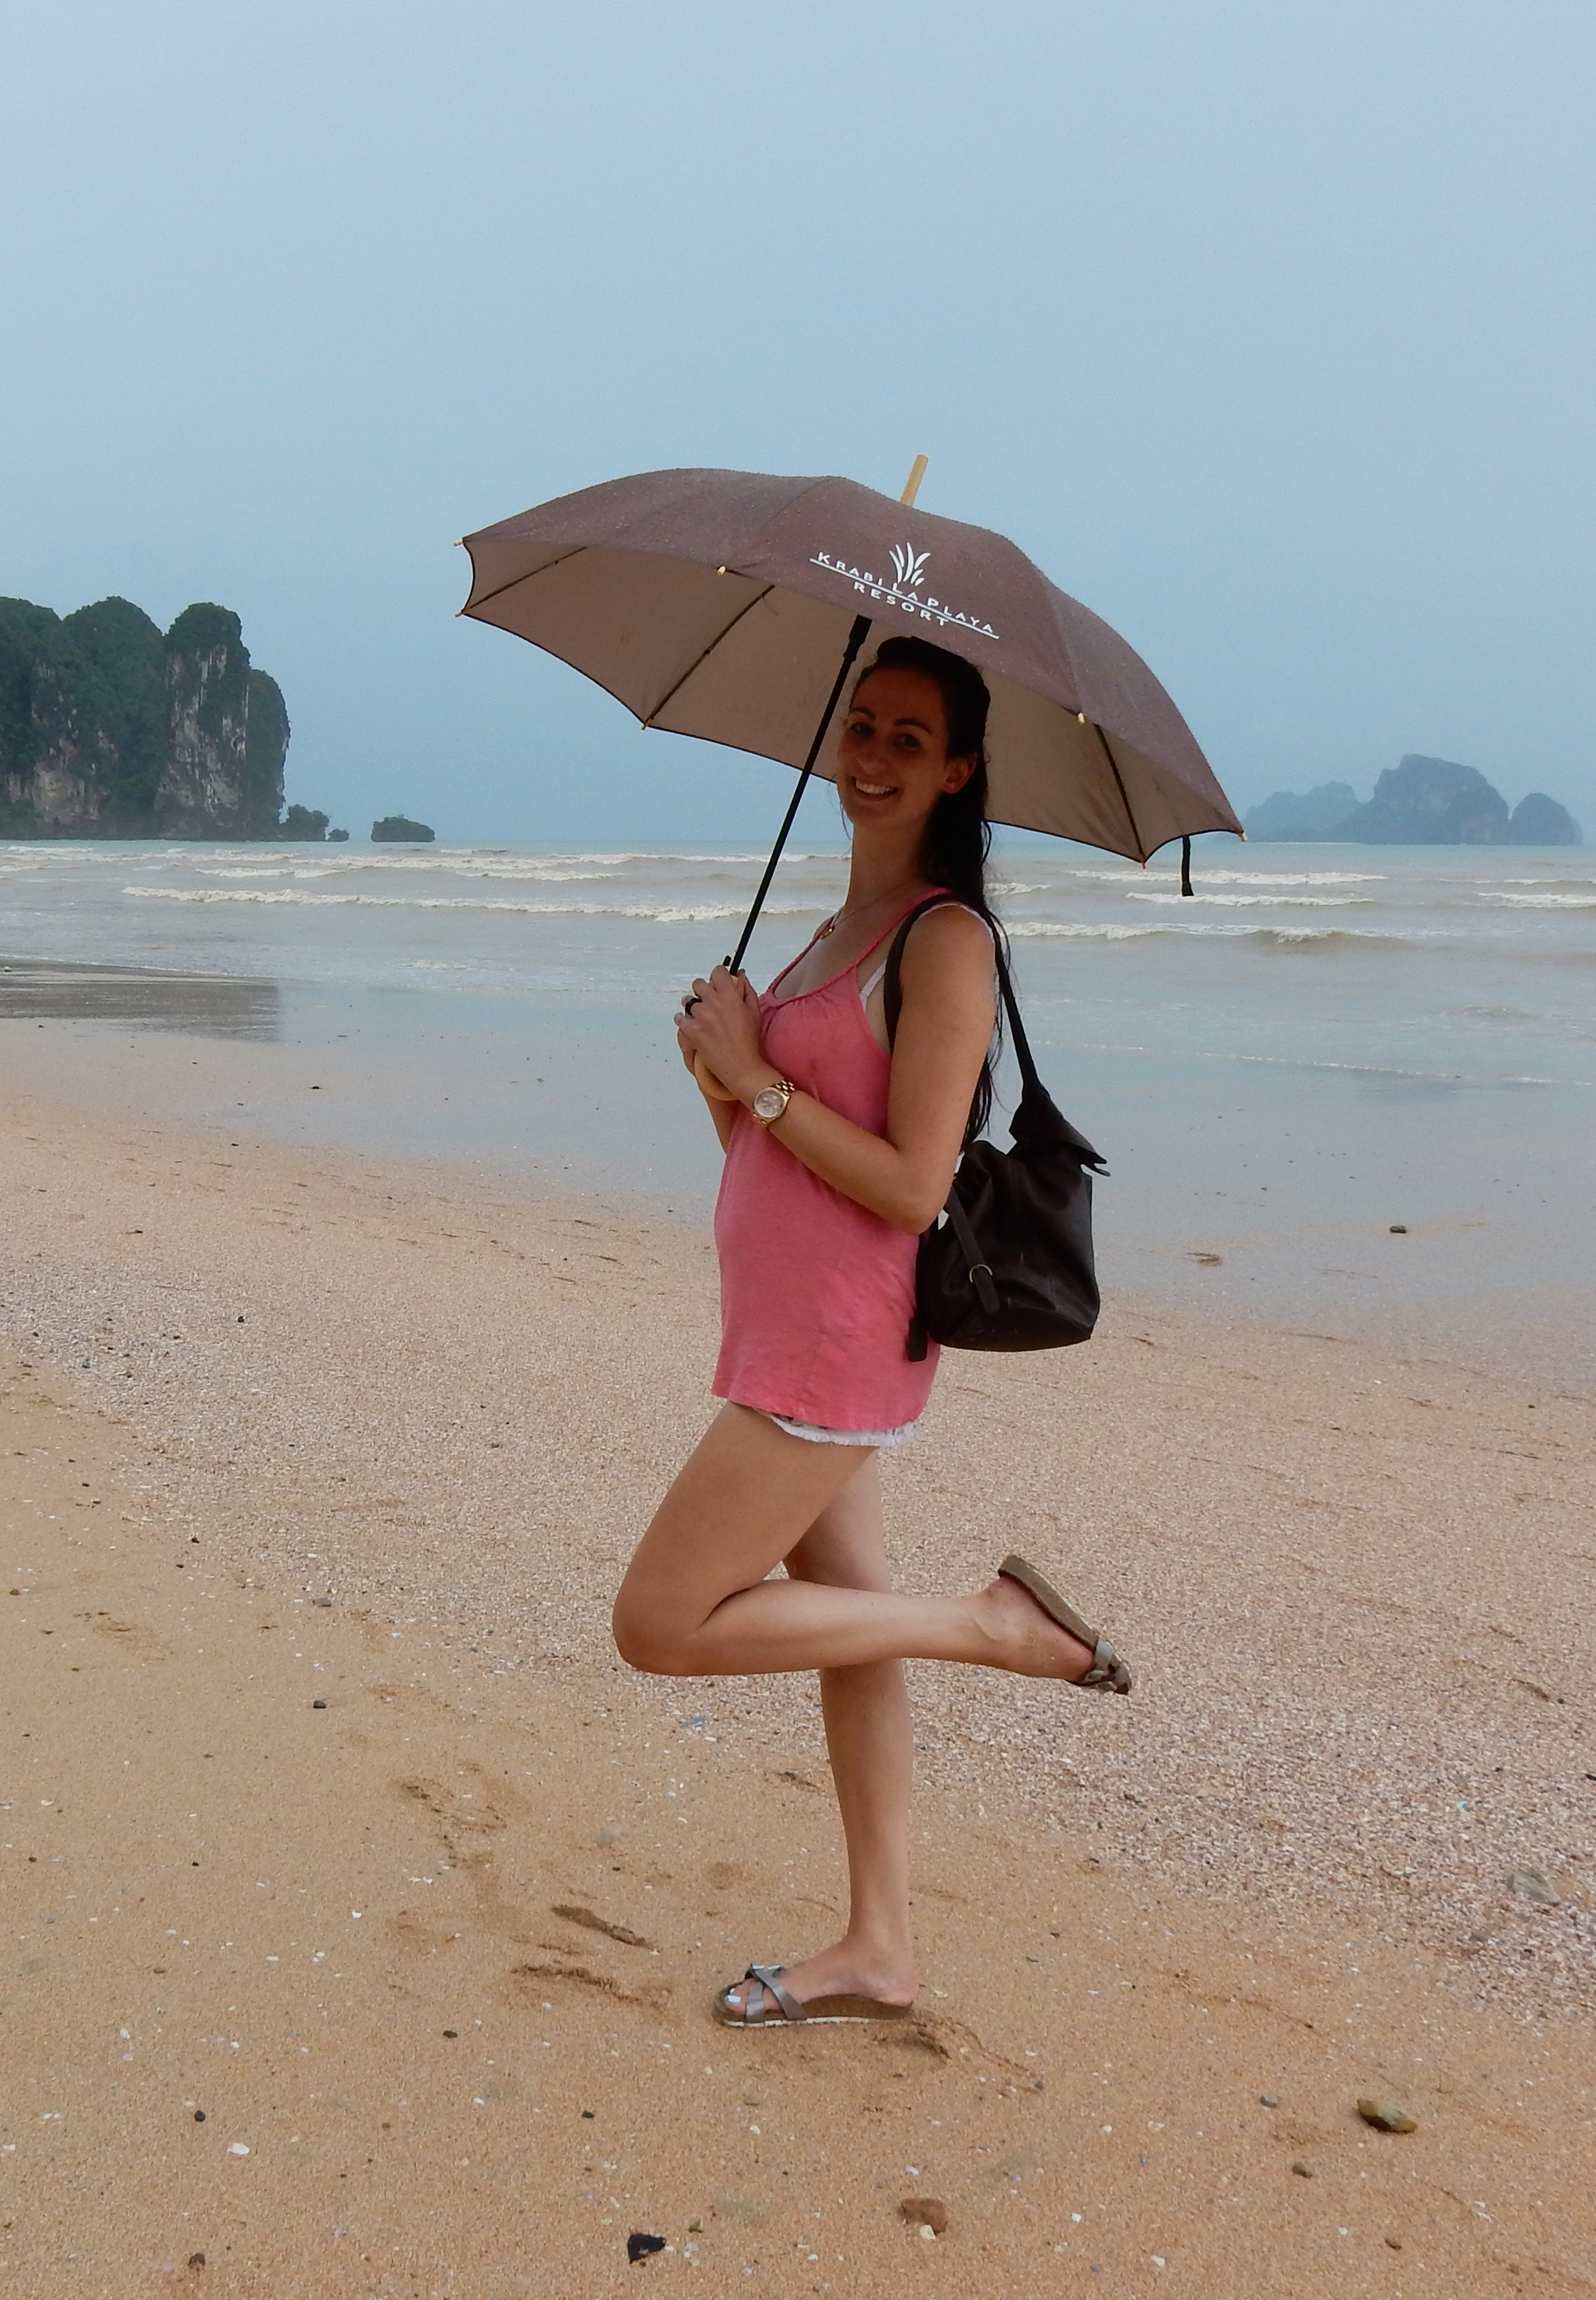 Birkenstock gezonde slippers goed voetbed vakantie krabi thailand Ao Nang Beach lifestyle by linda